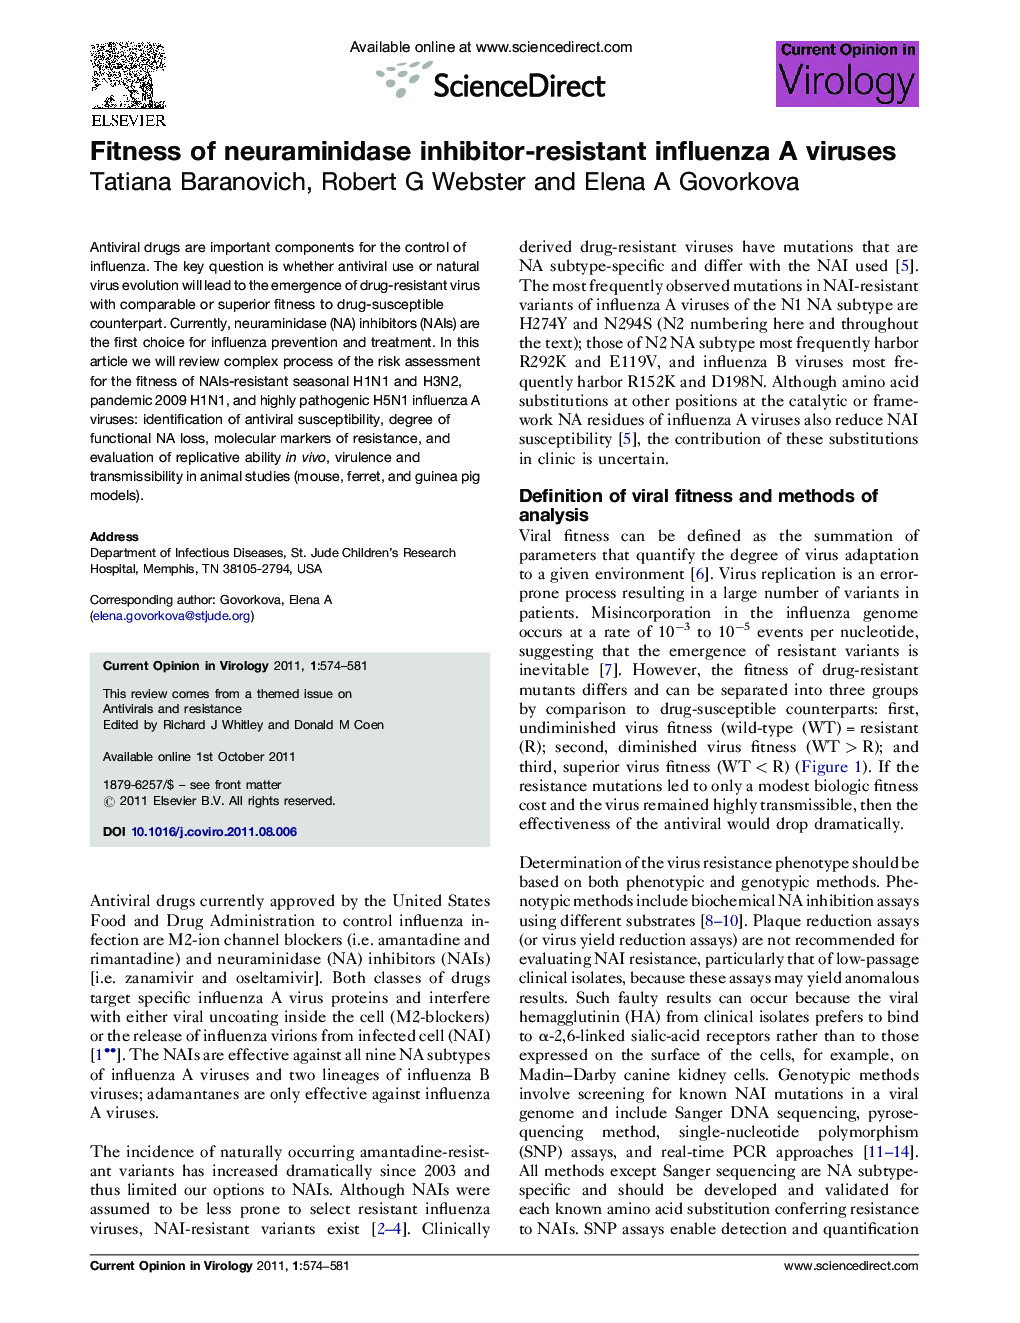 Fitness of neuraminidase inhibitor-resistant influenza A viruses